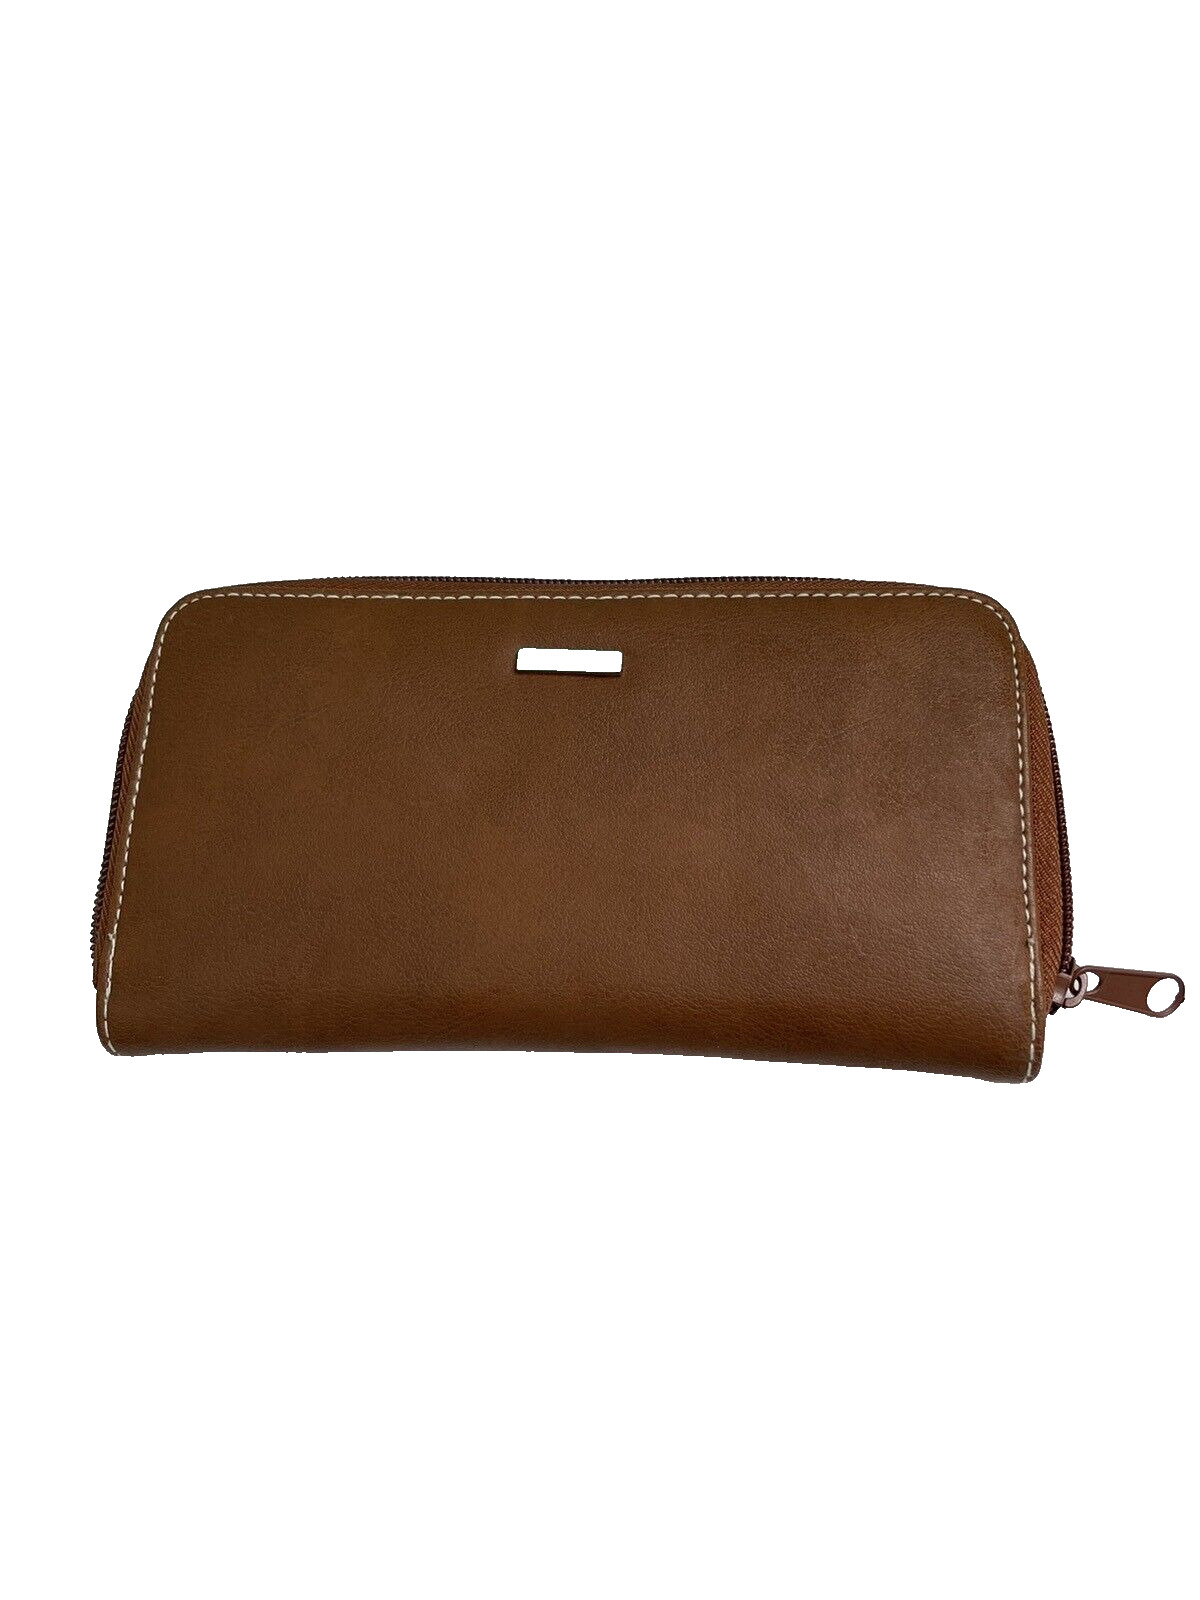 Rosetti  Brown Faux Leather Zip Around Clutch Wallet/Billfold NEW